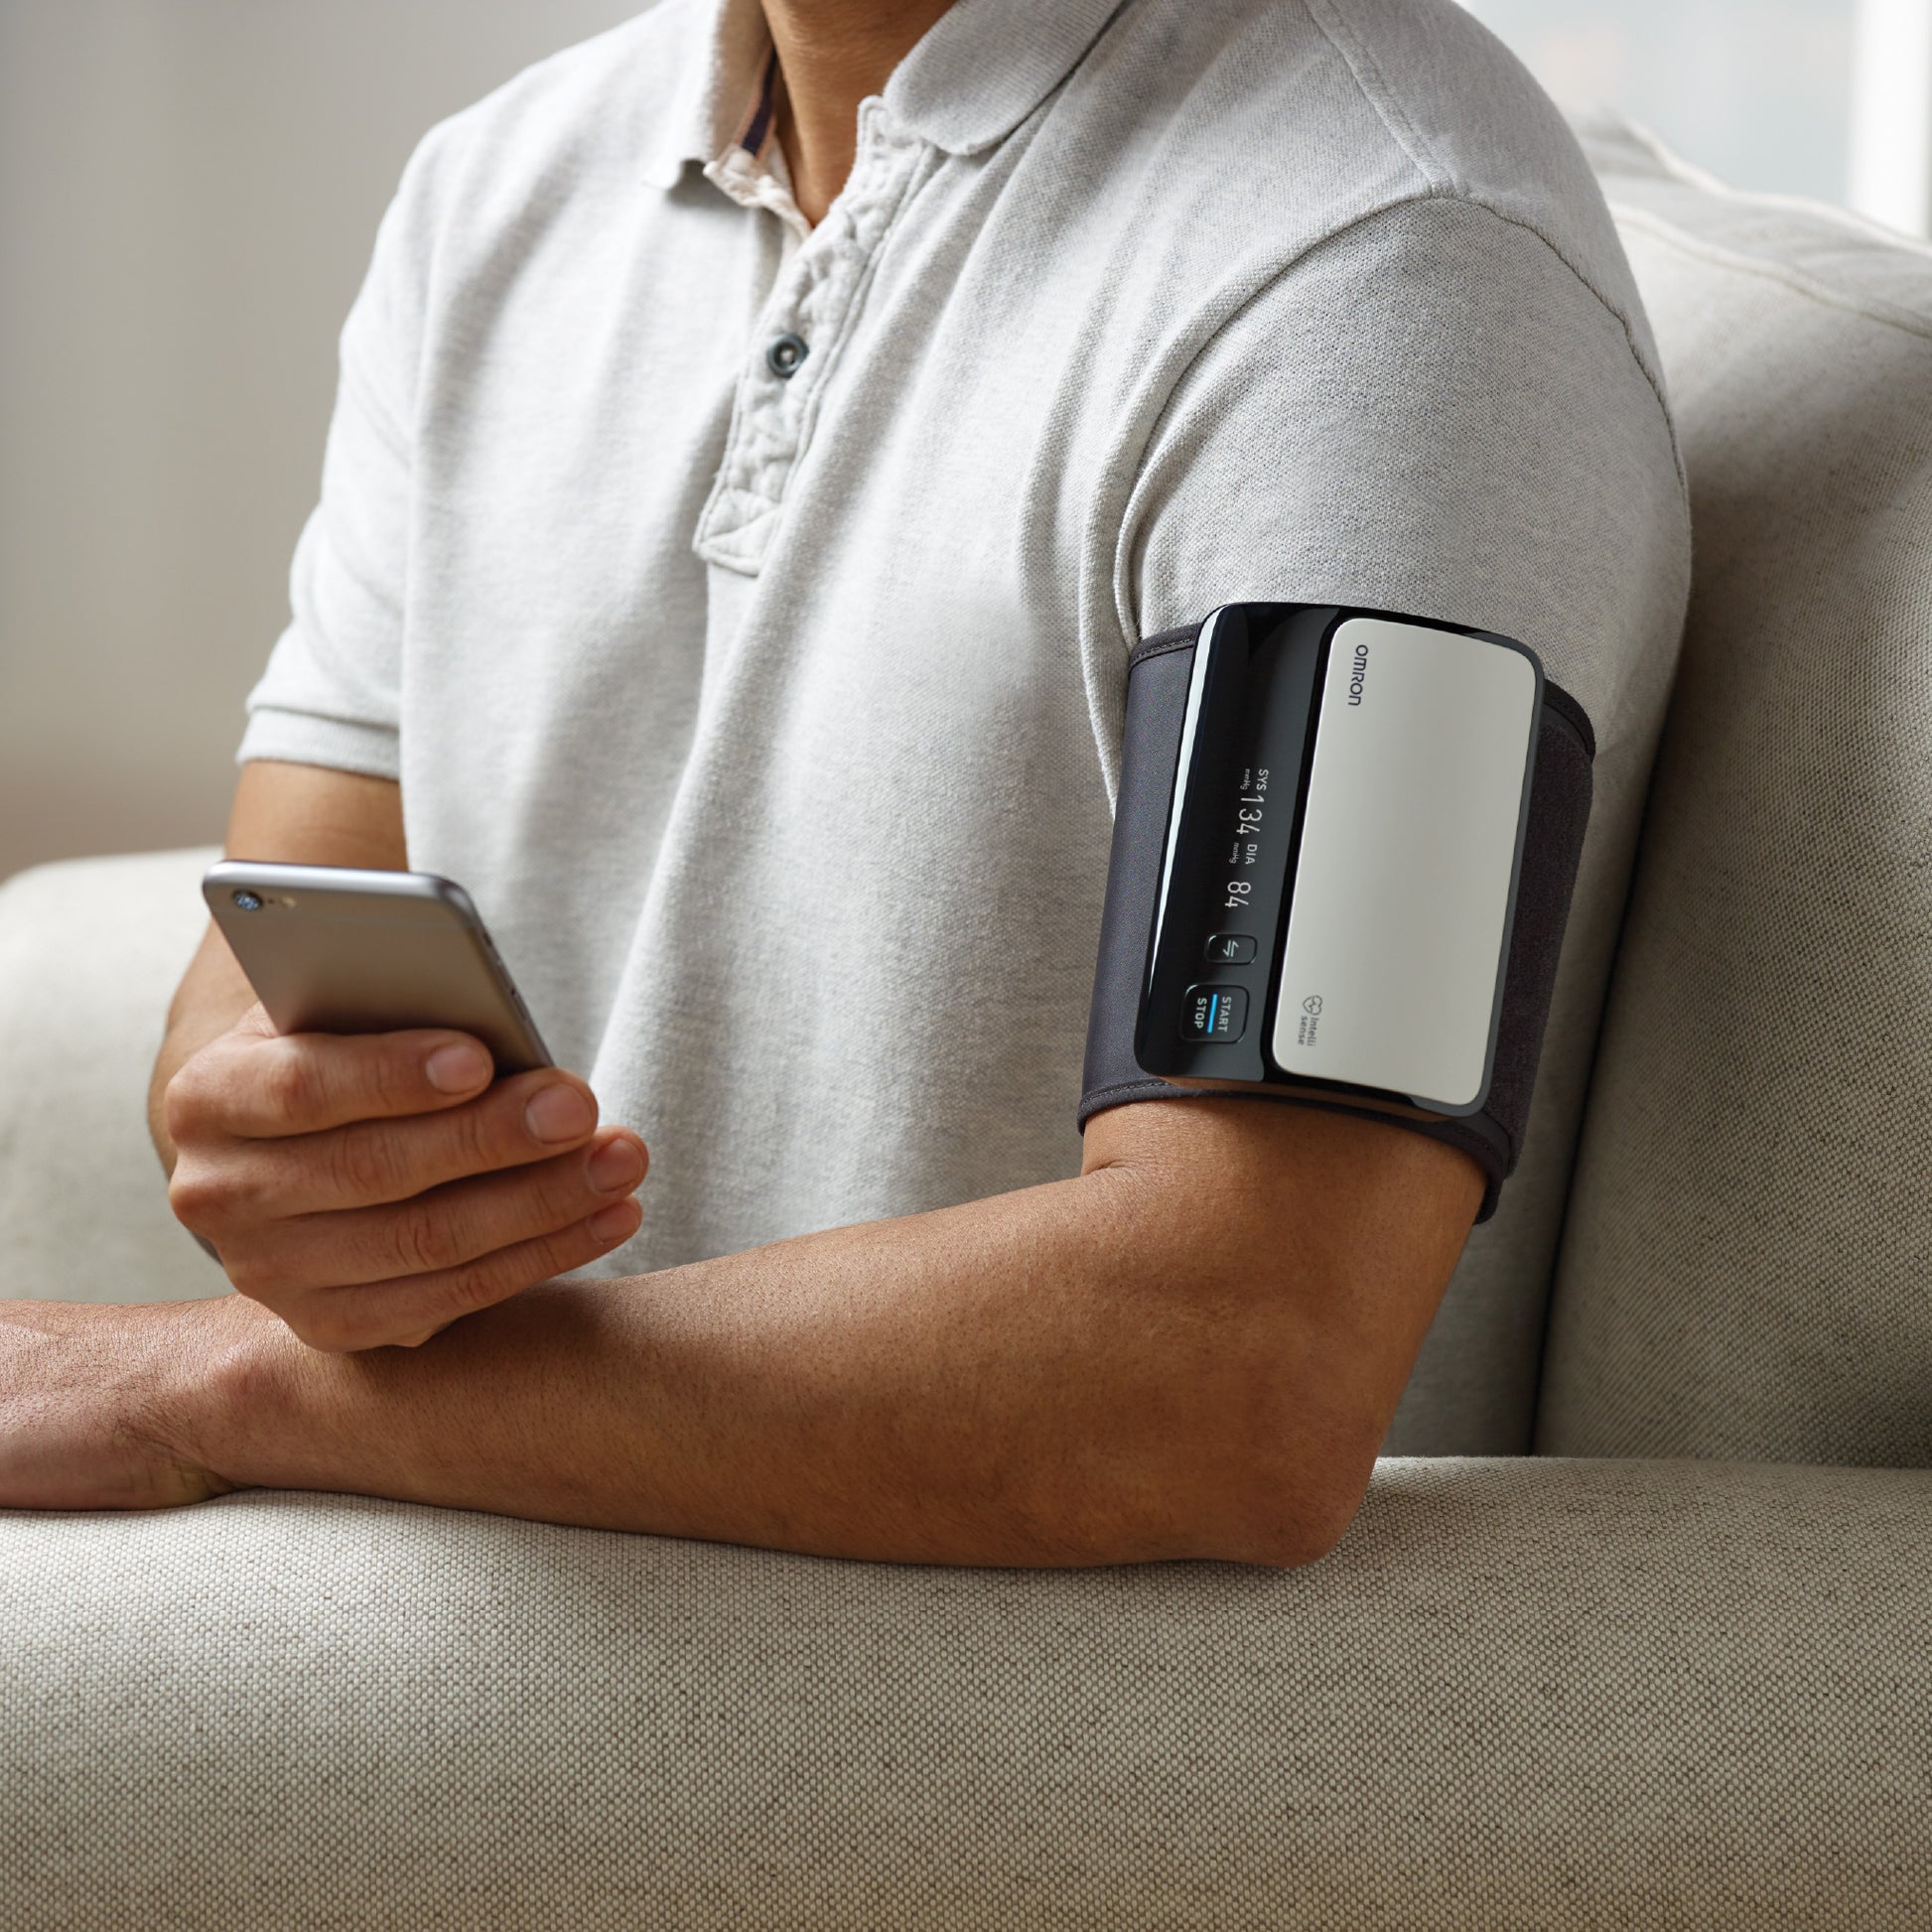 Gima - Intelligent Automatic Digital Arm Blood Pressure Monitor for